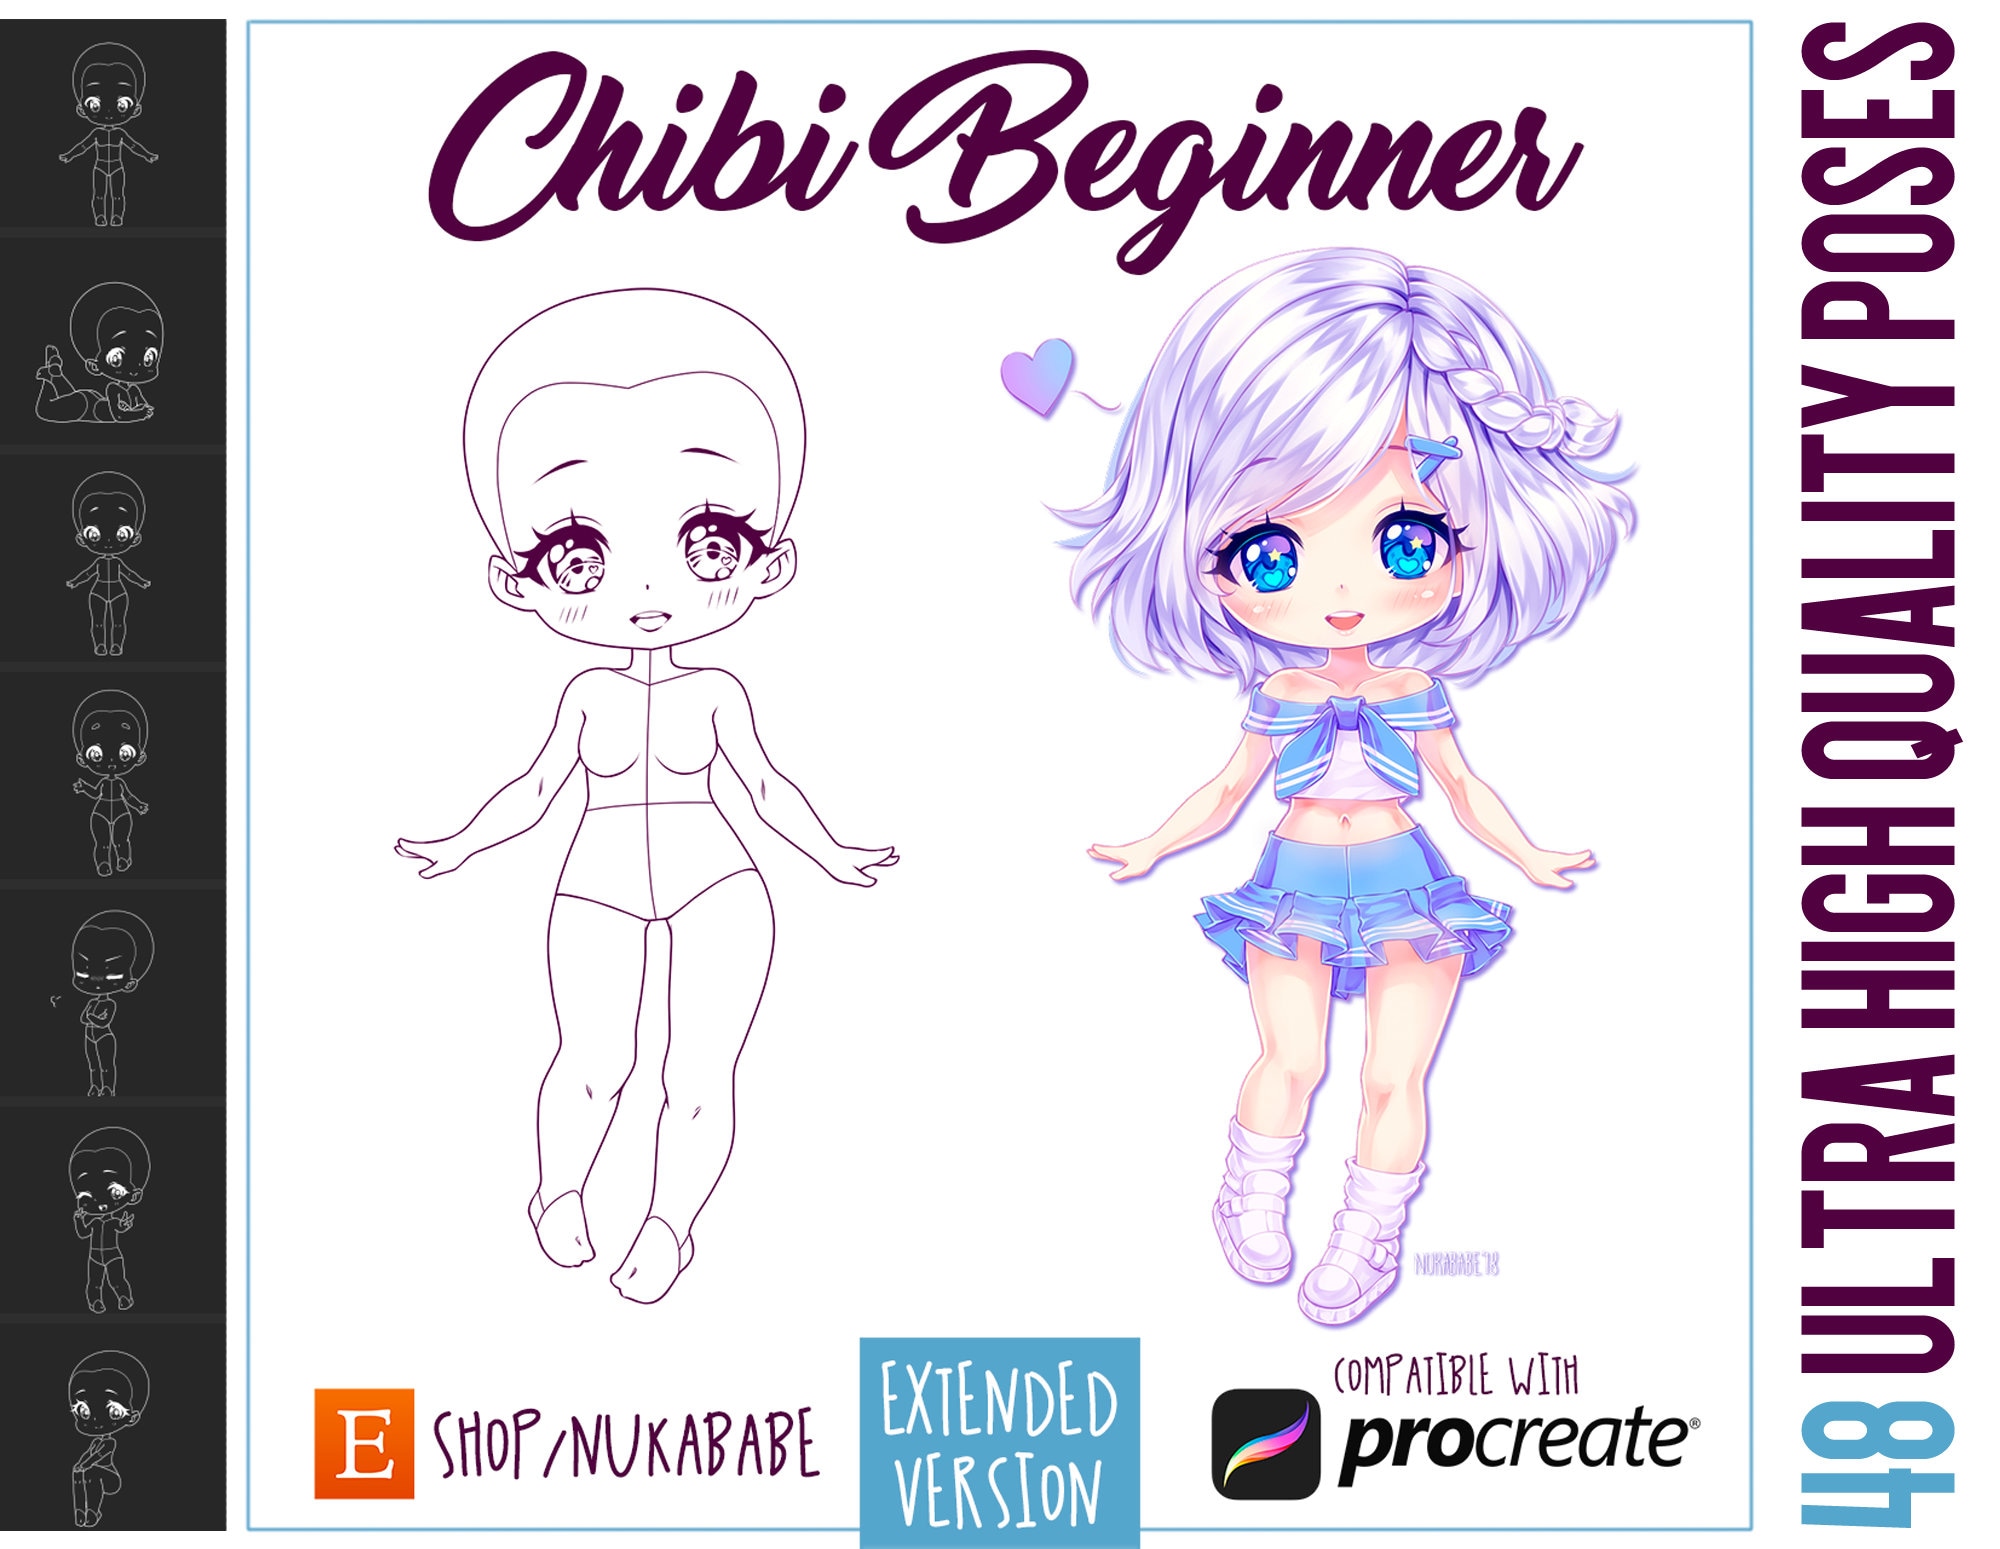 Procreate Chibi Poses Stamps Couple Poses Anime Figure -  Hong Kong